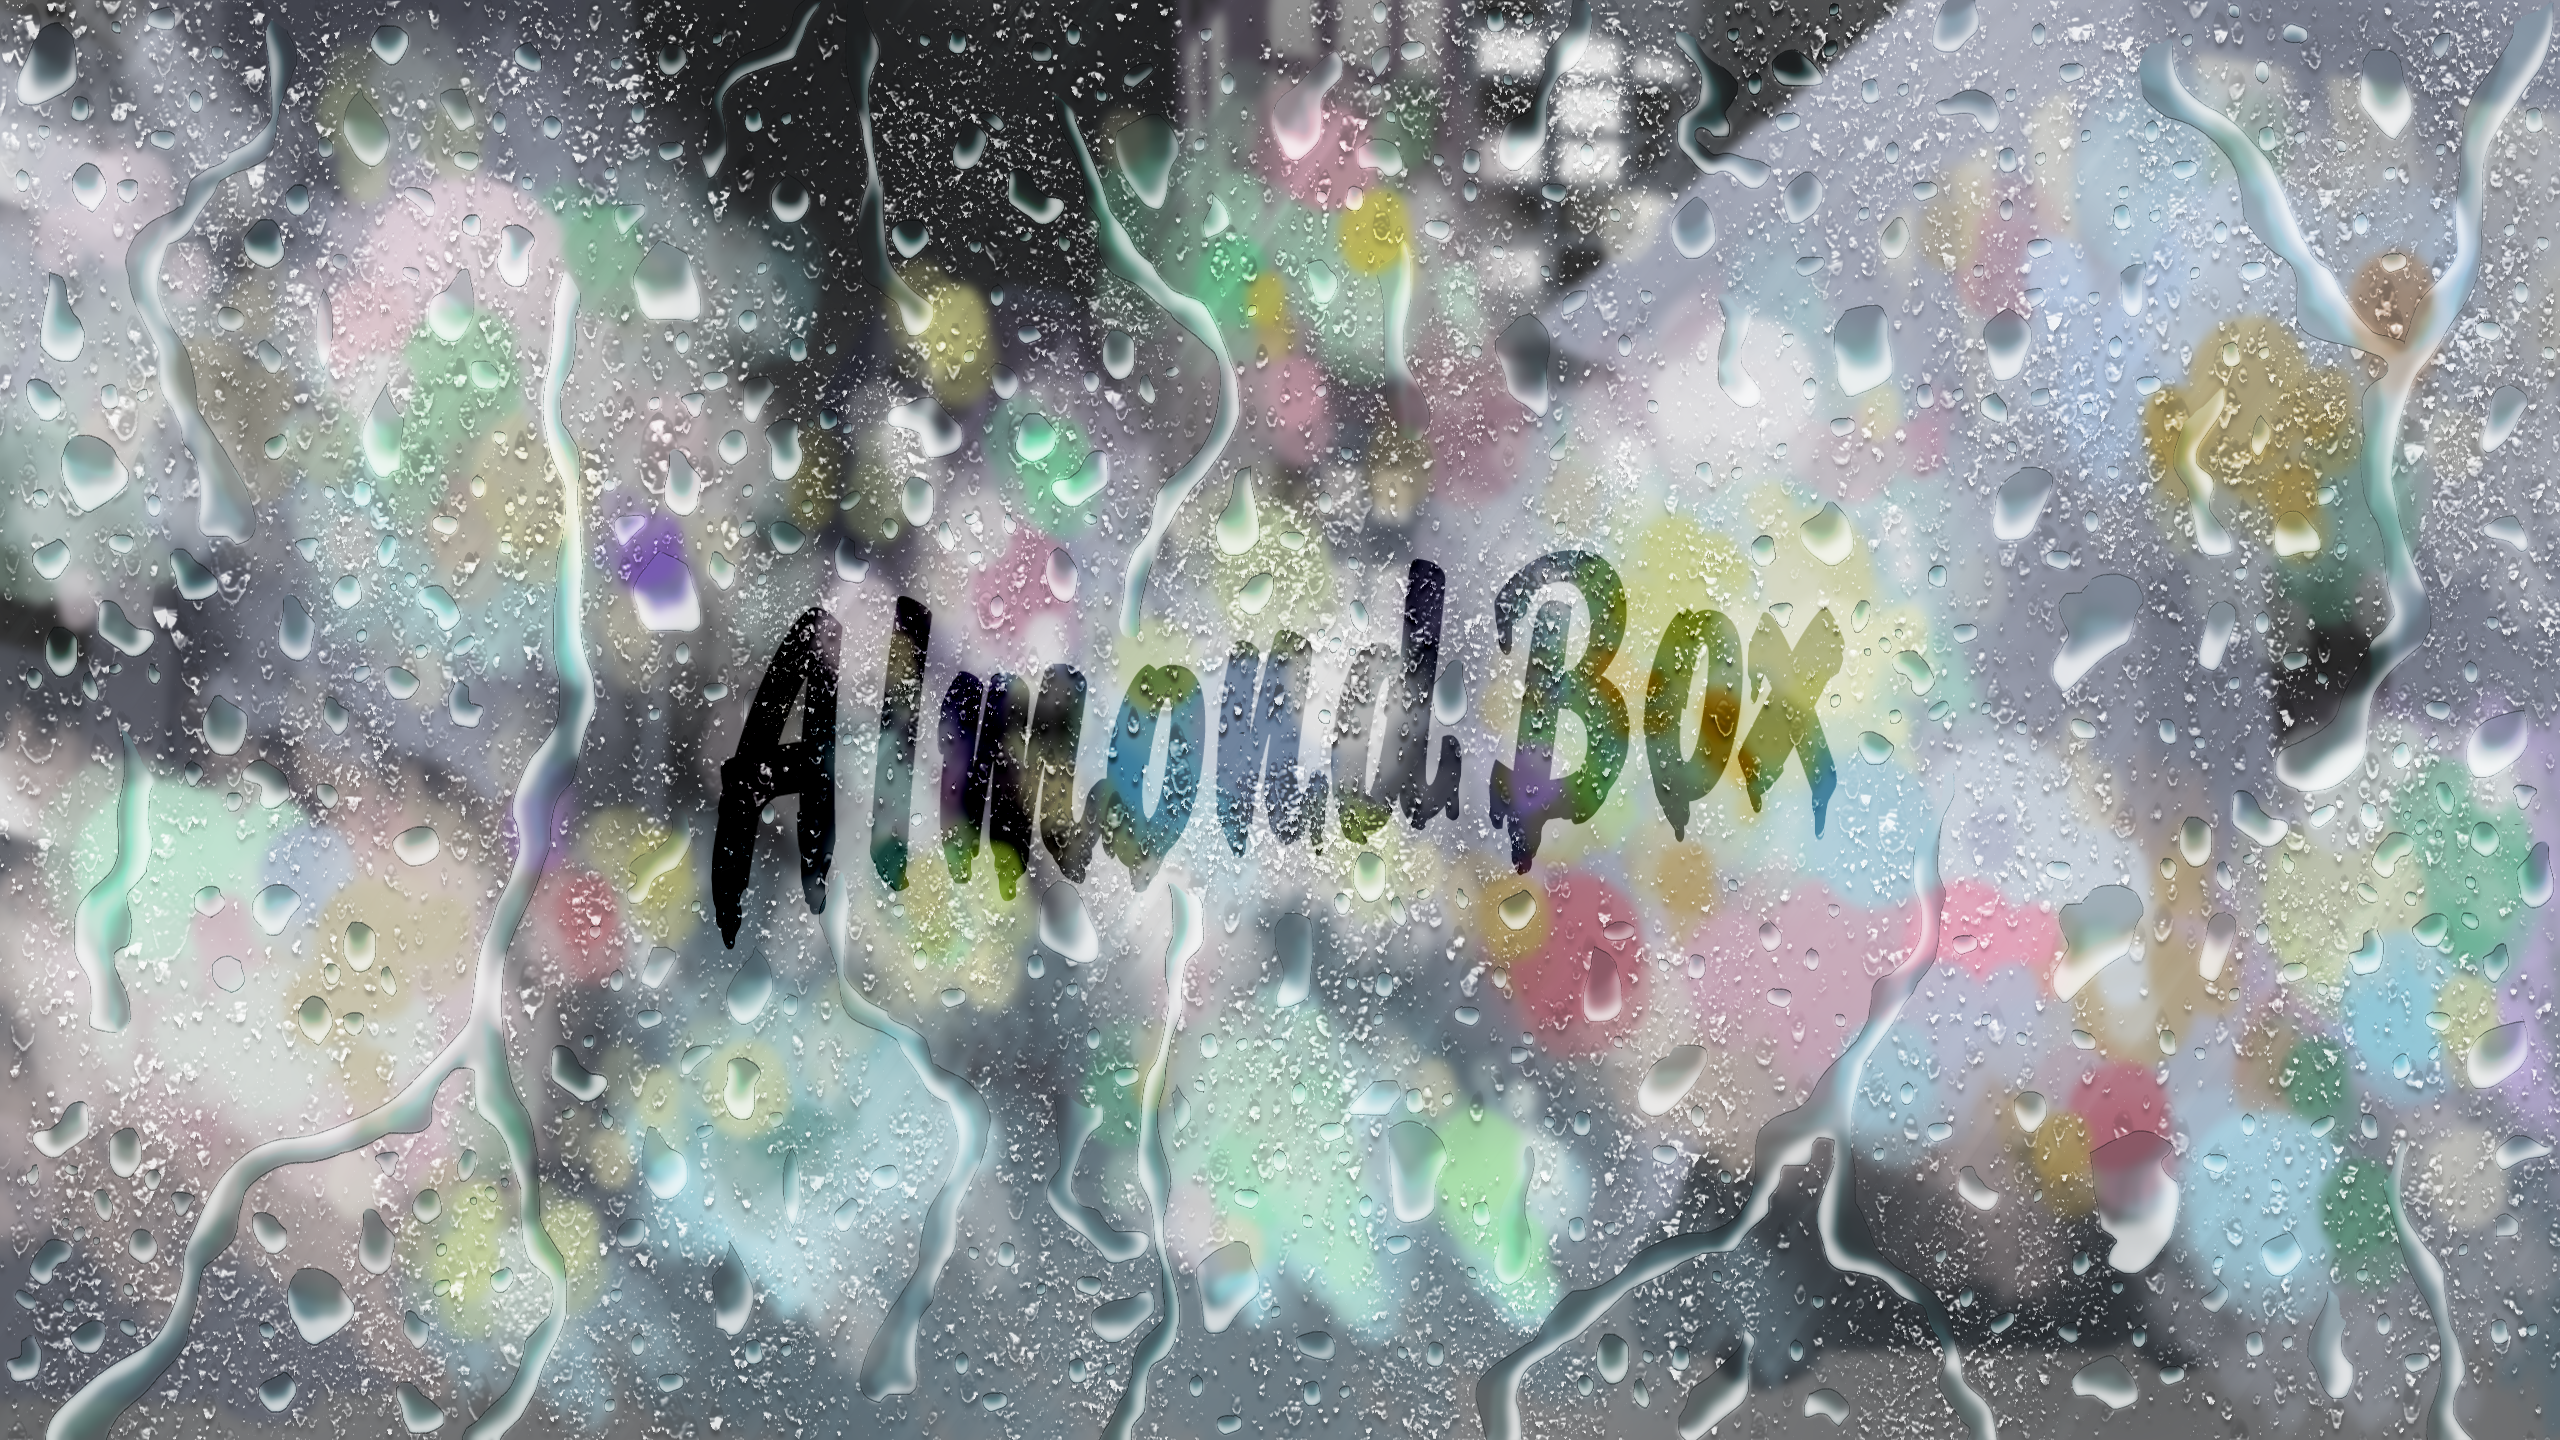 almondbox